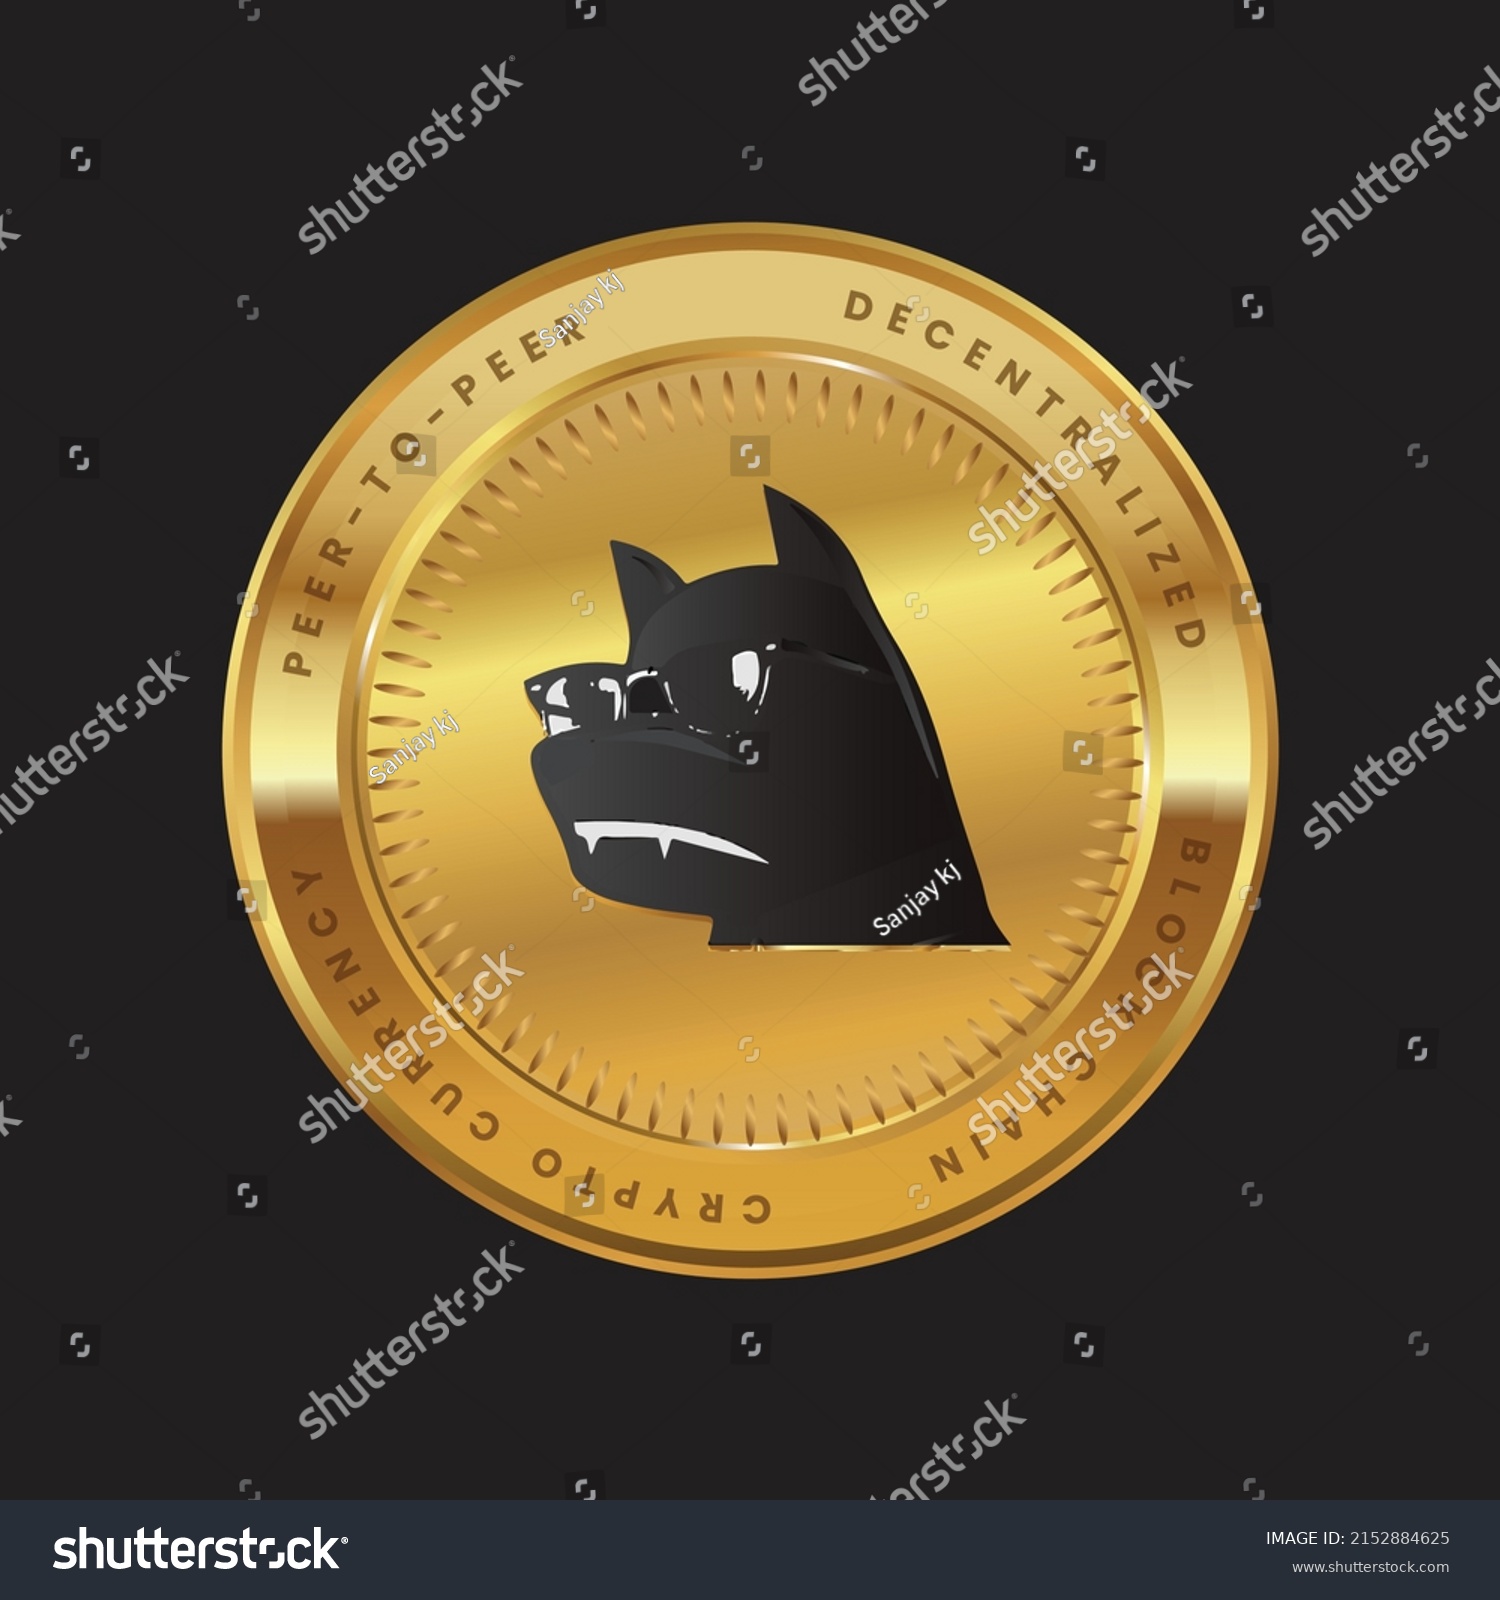 dogefather crypto coin